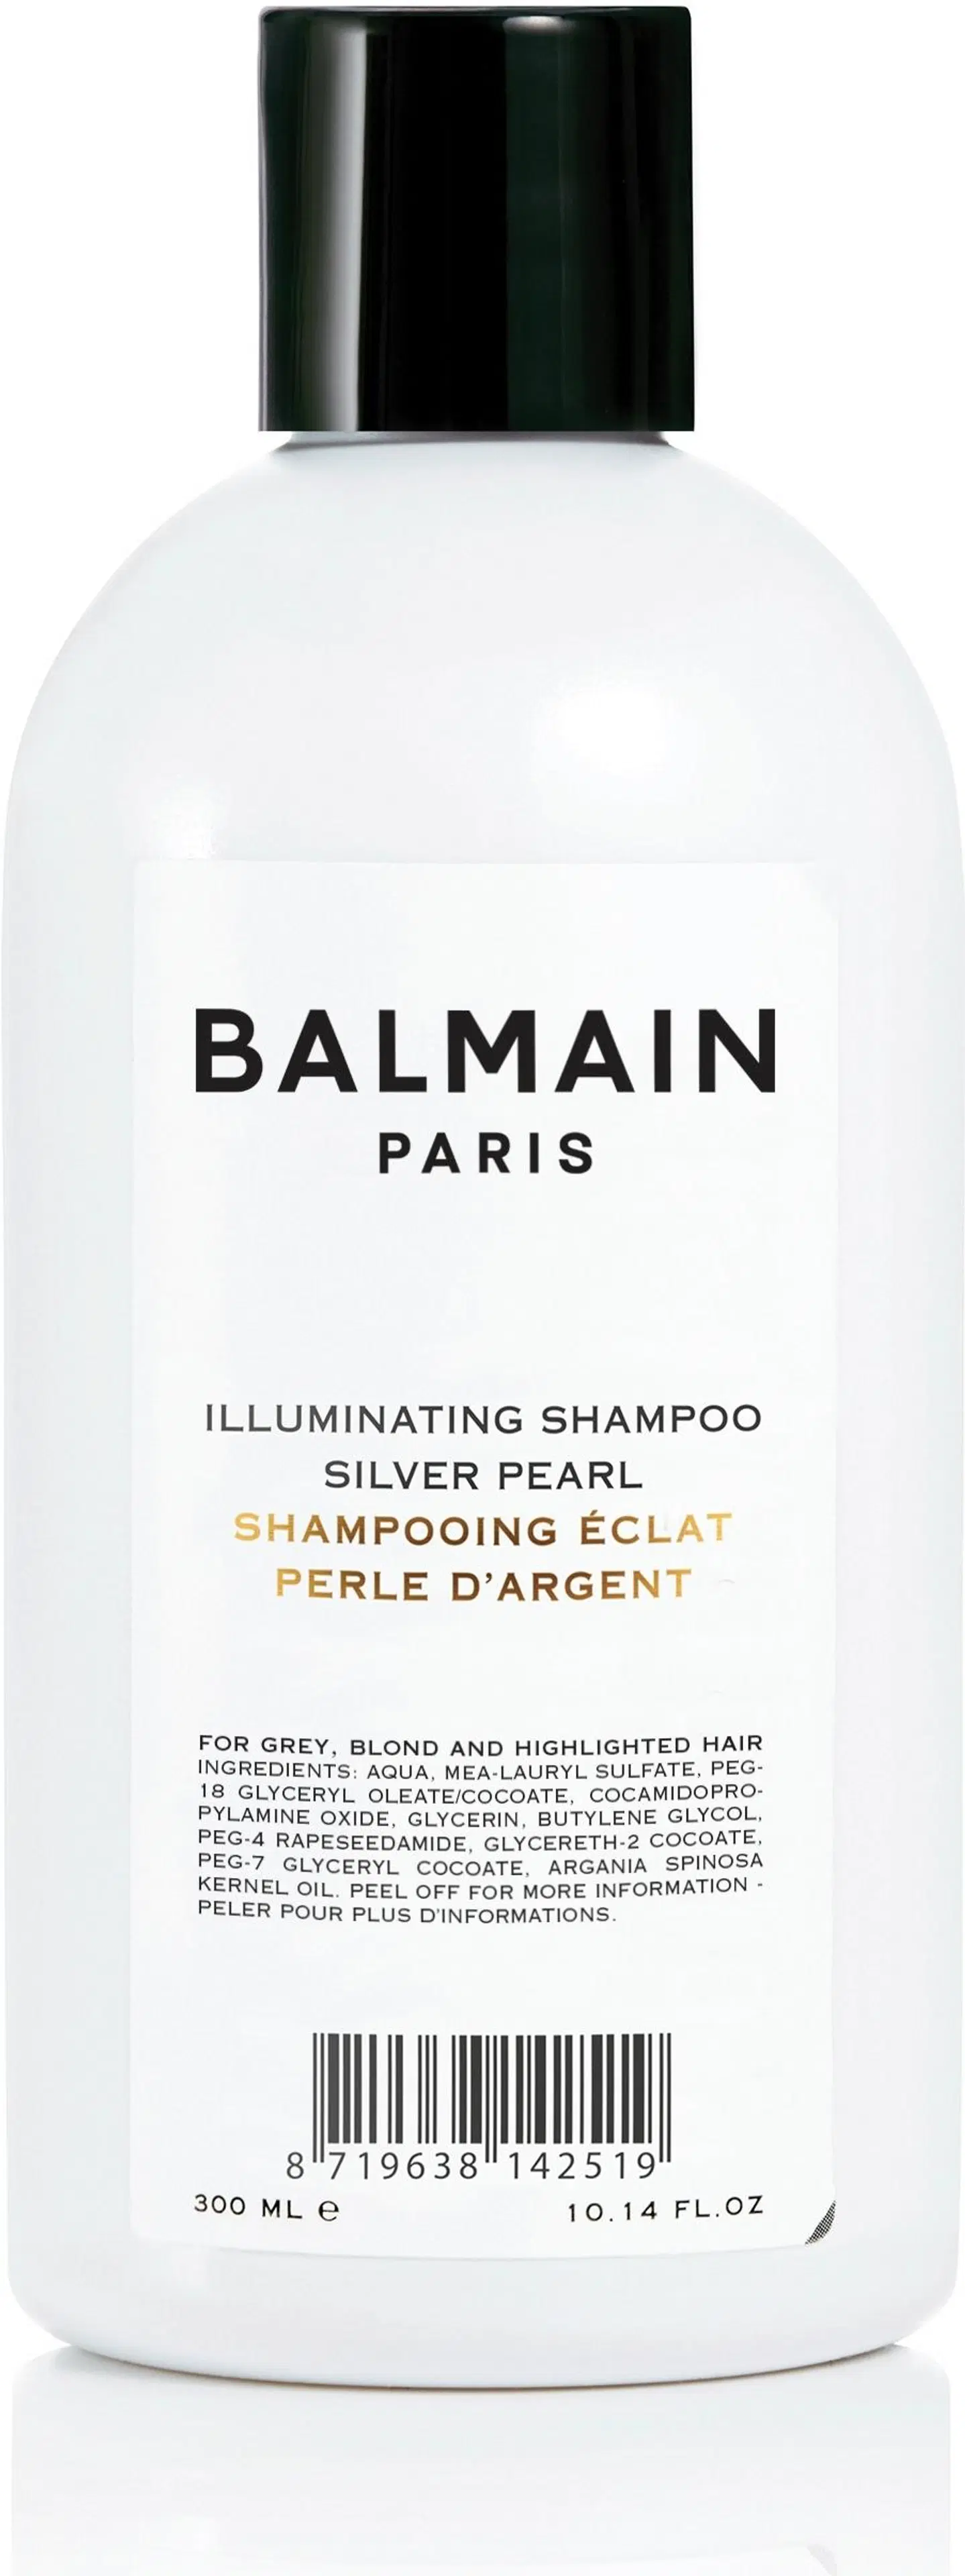 Balmain Paris Illuminating Silver Pearl shampoo 300 ml